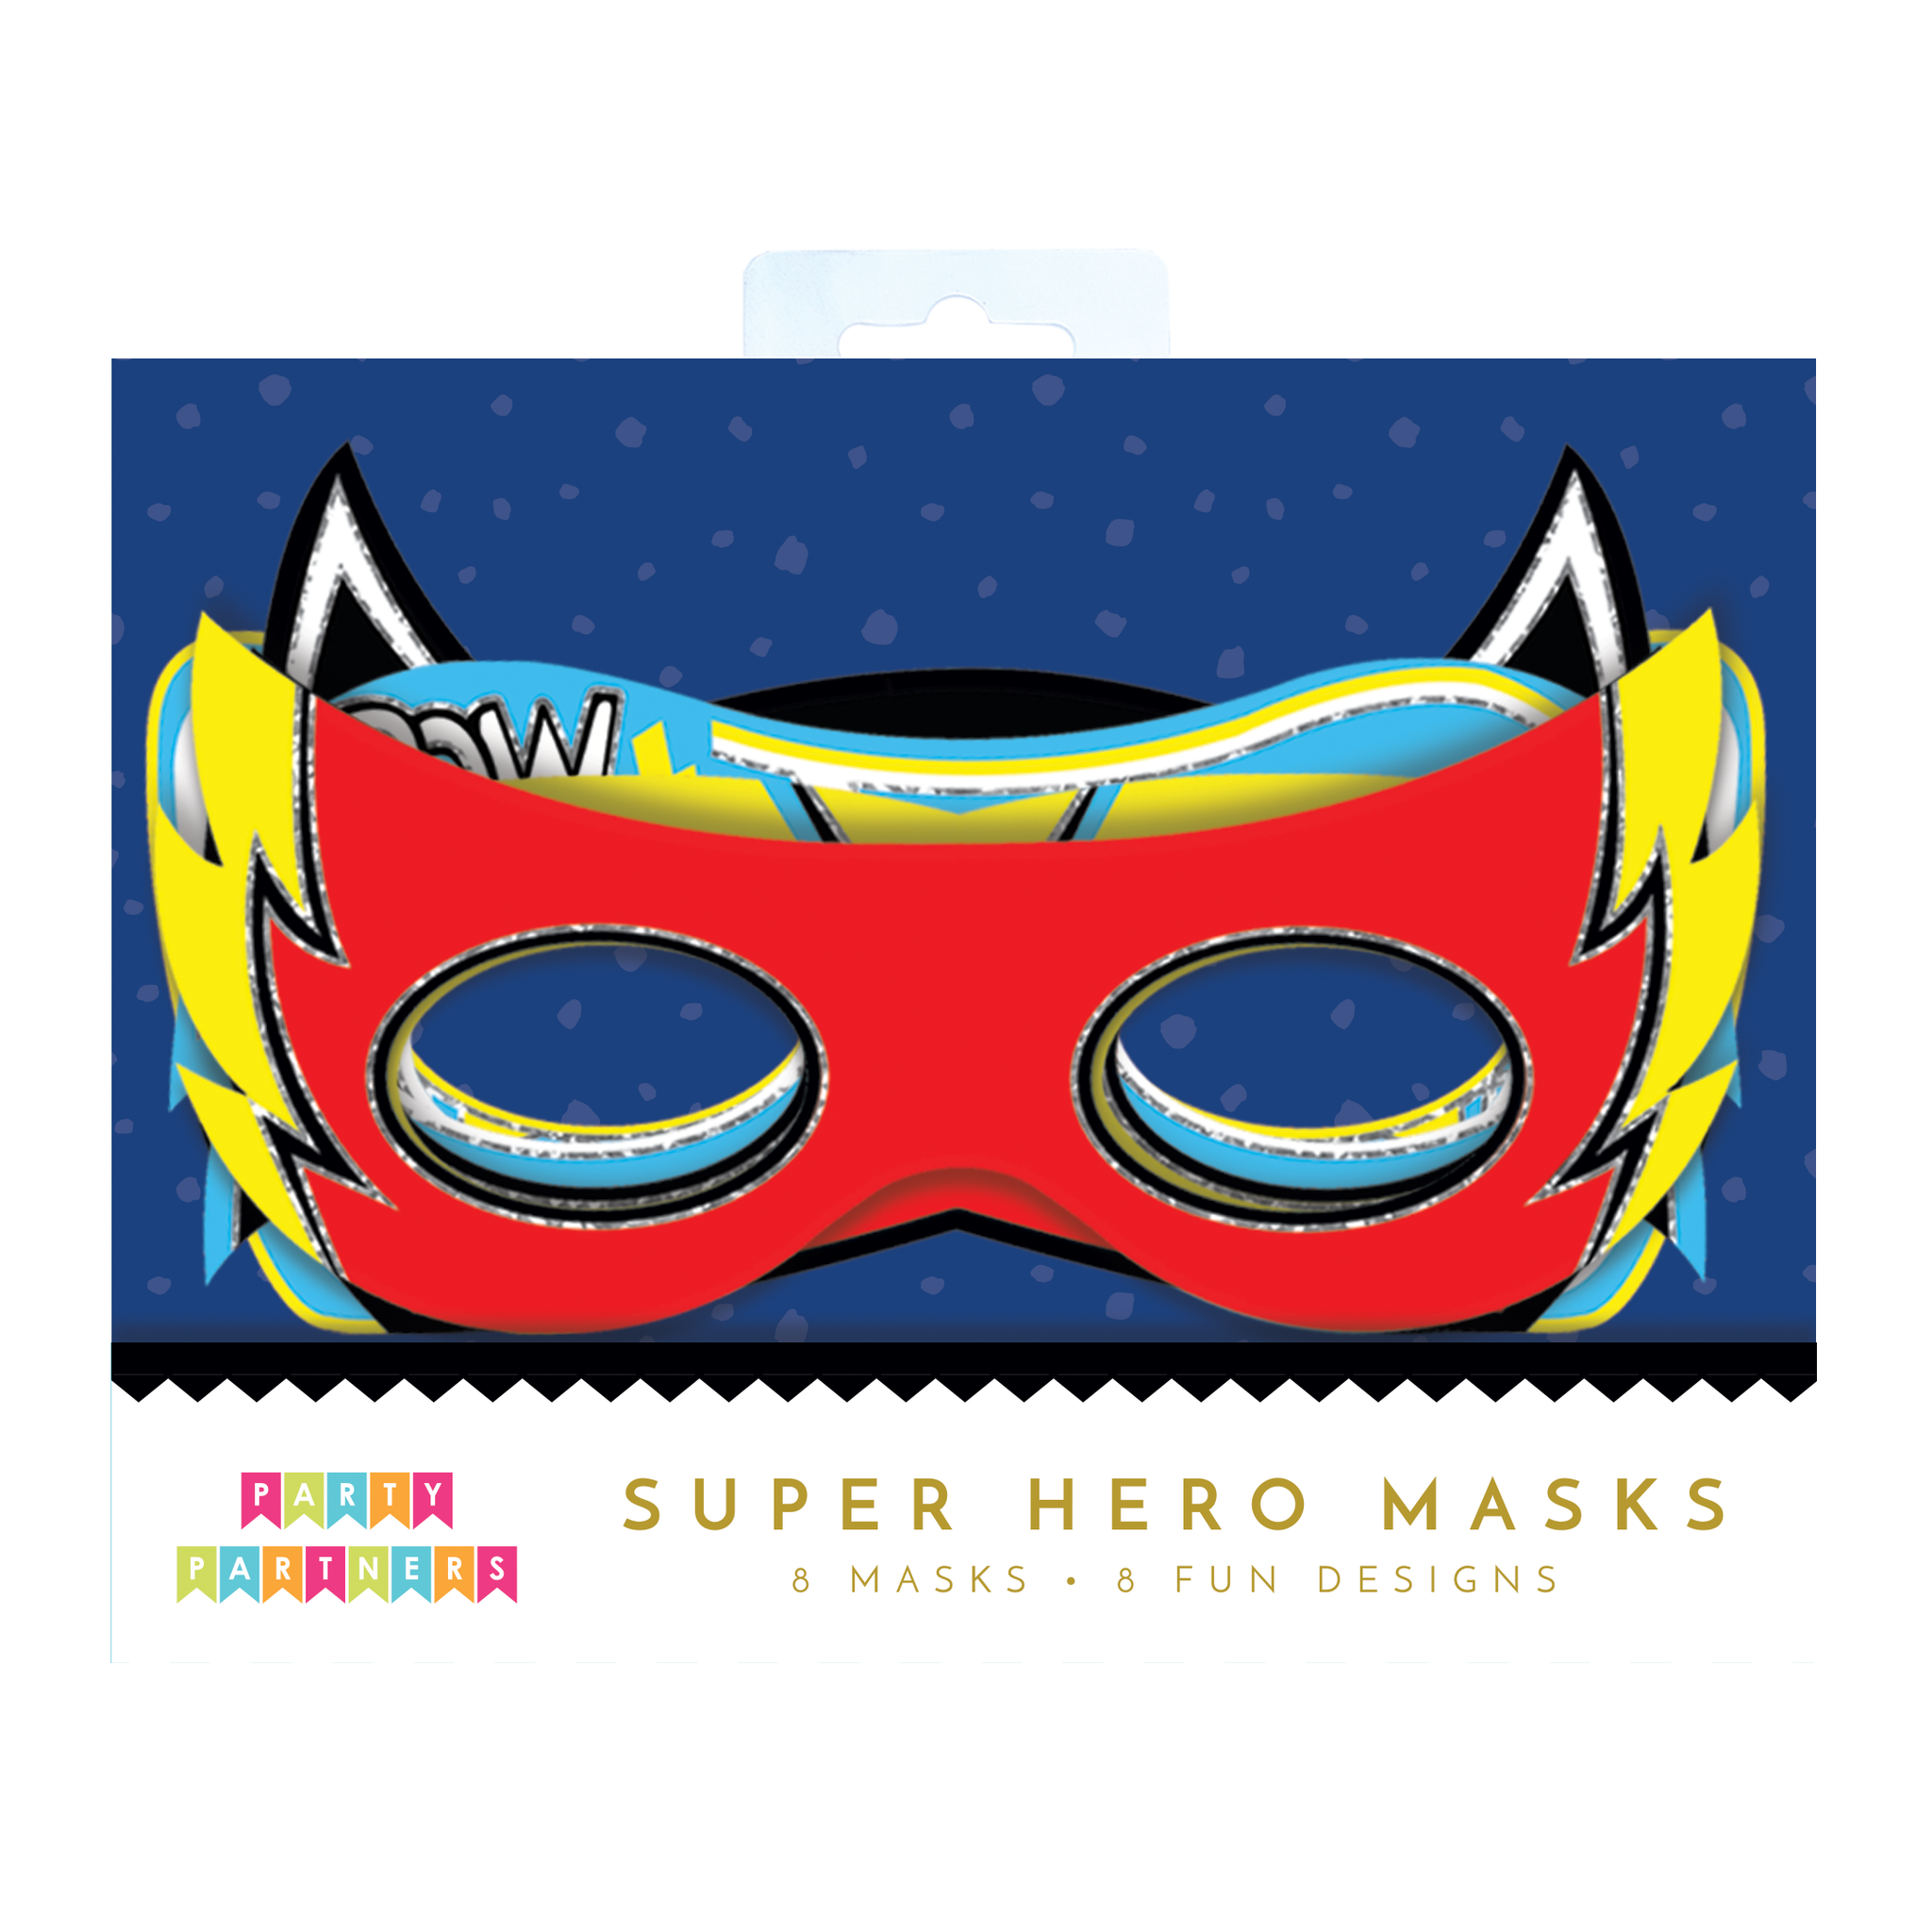 Hero Masks Party Partners